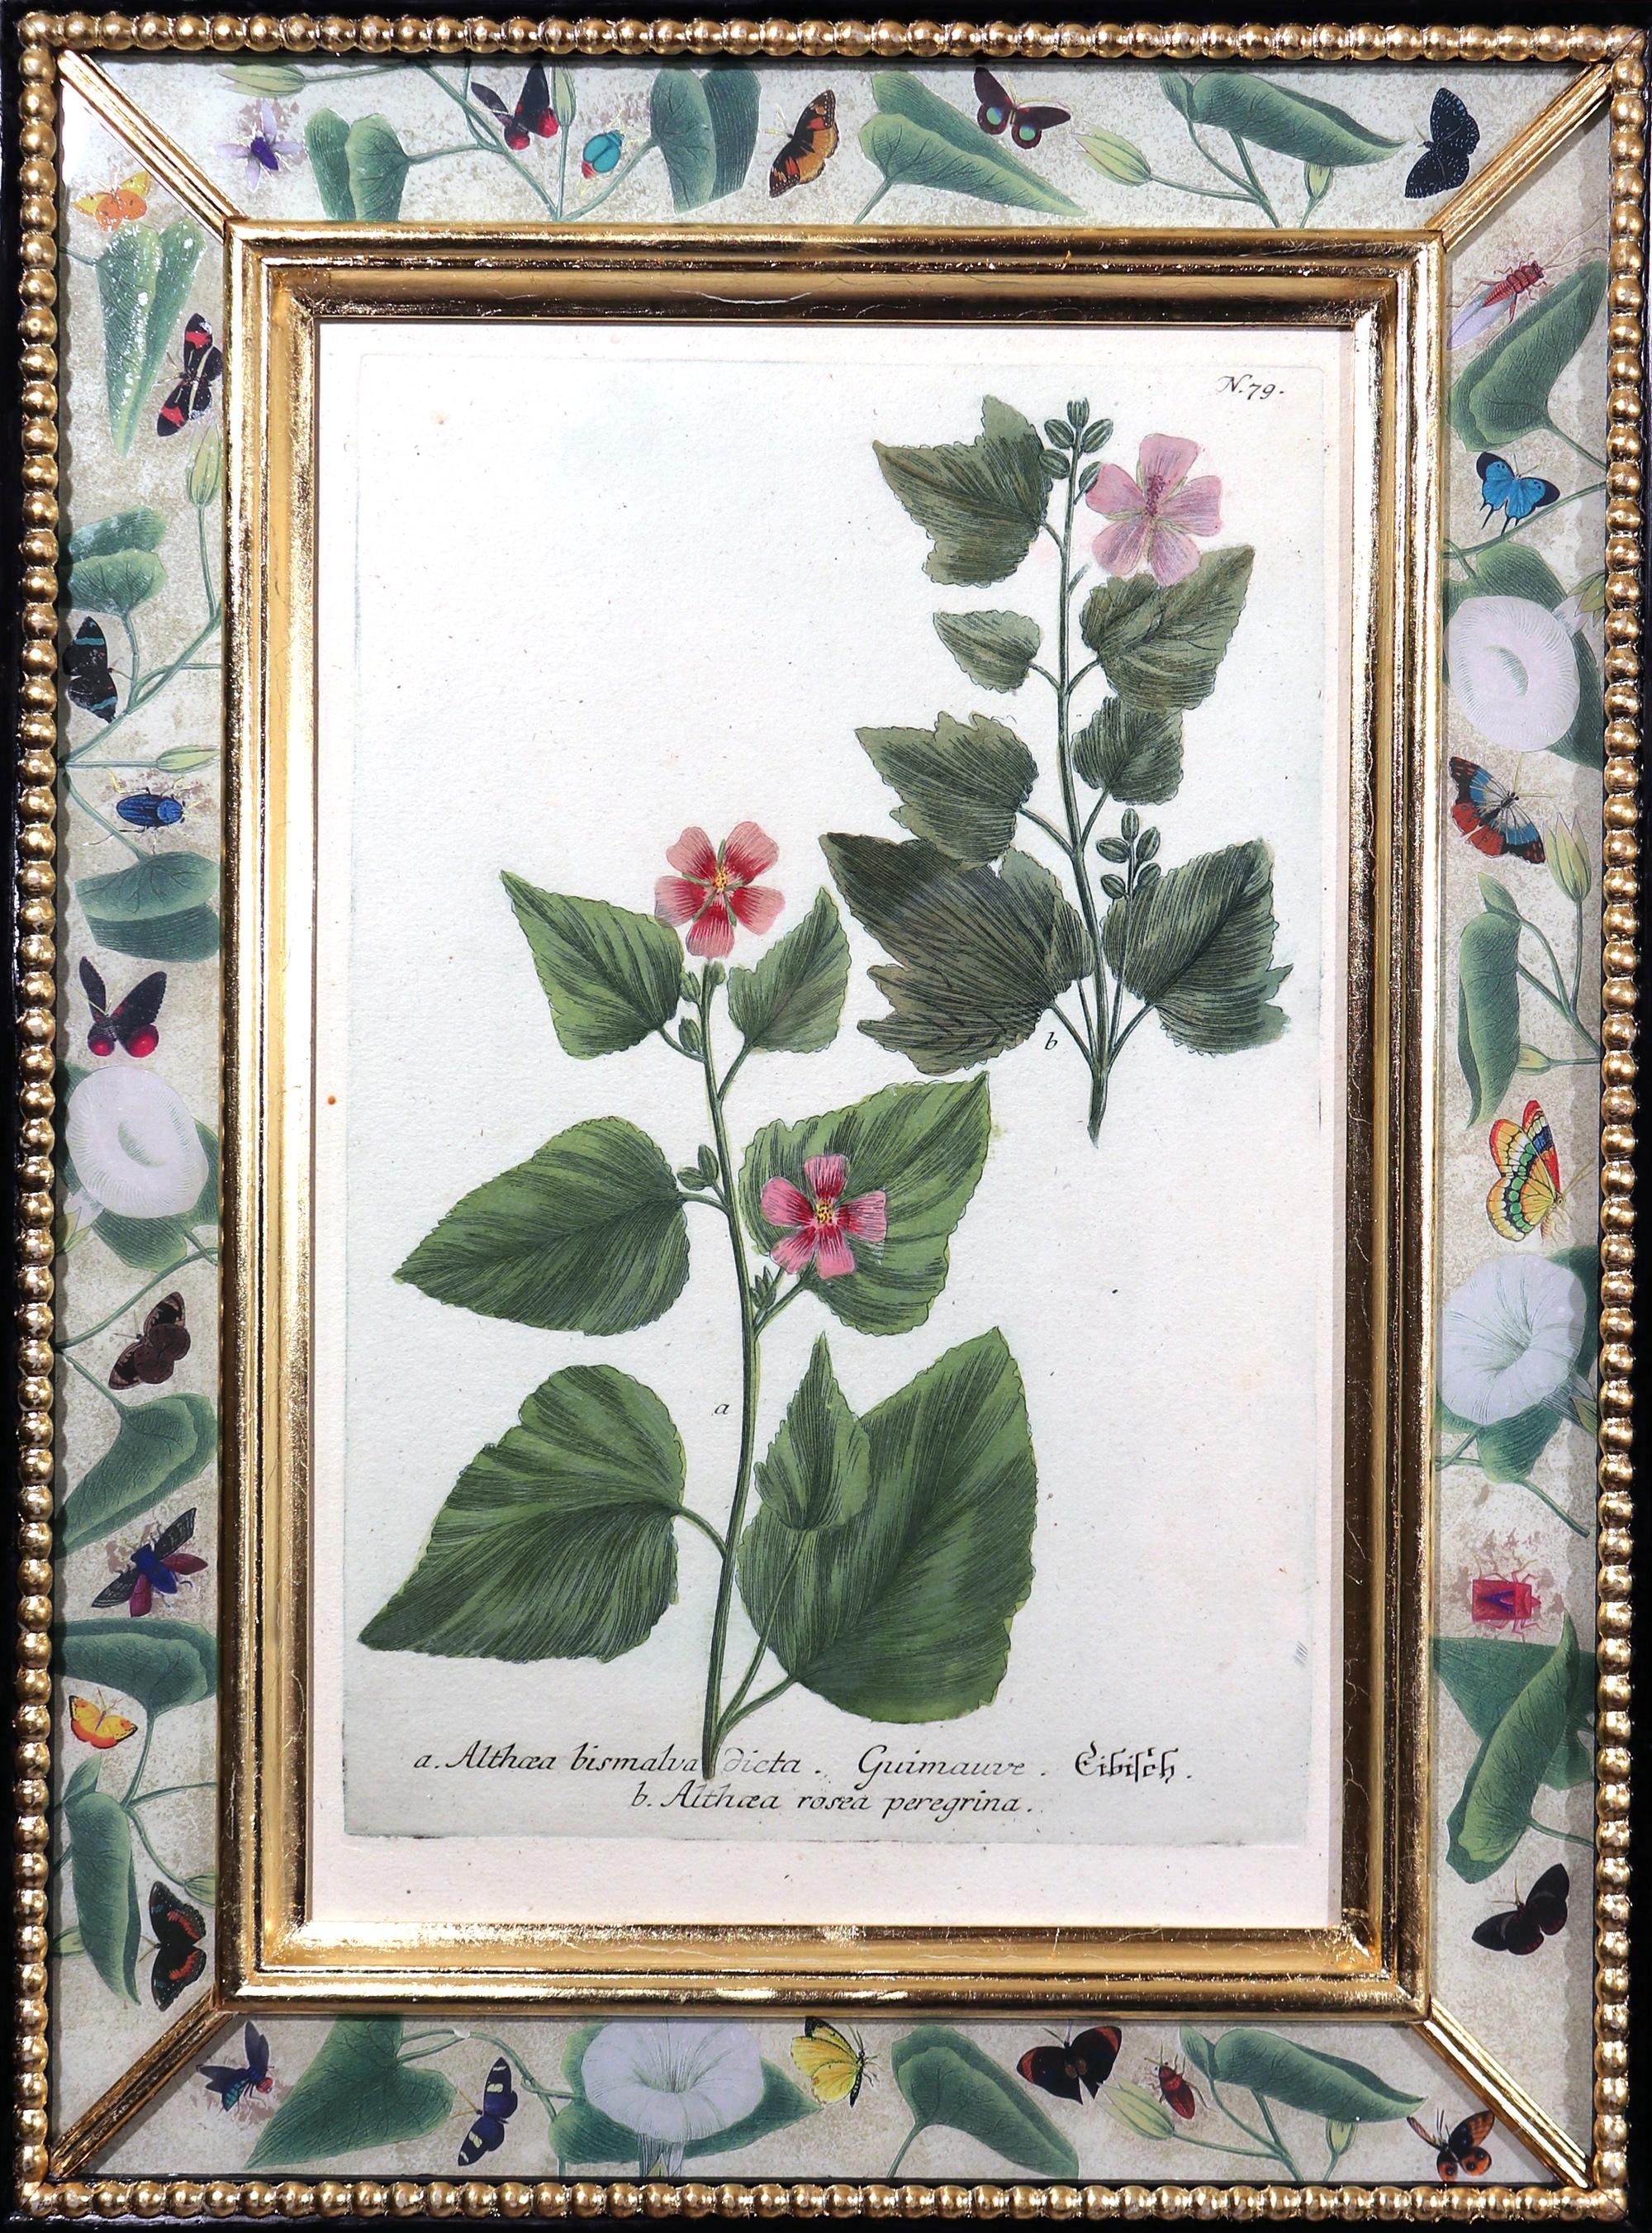 18th century botanical illustrations